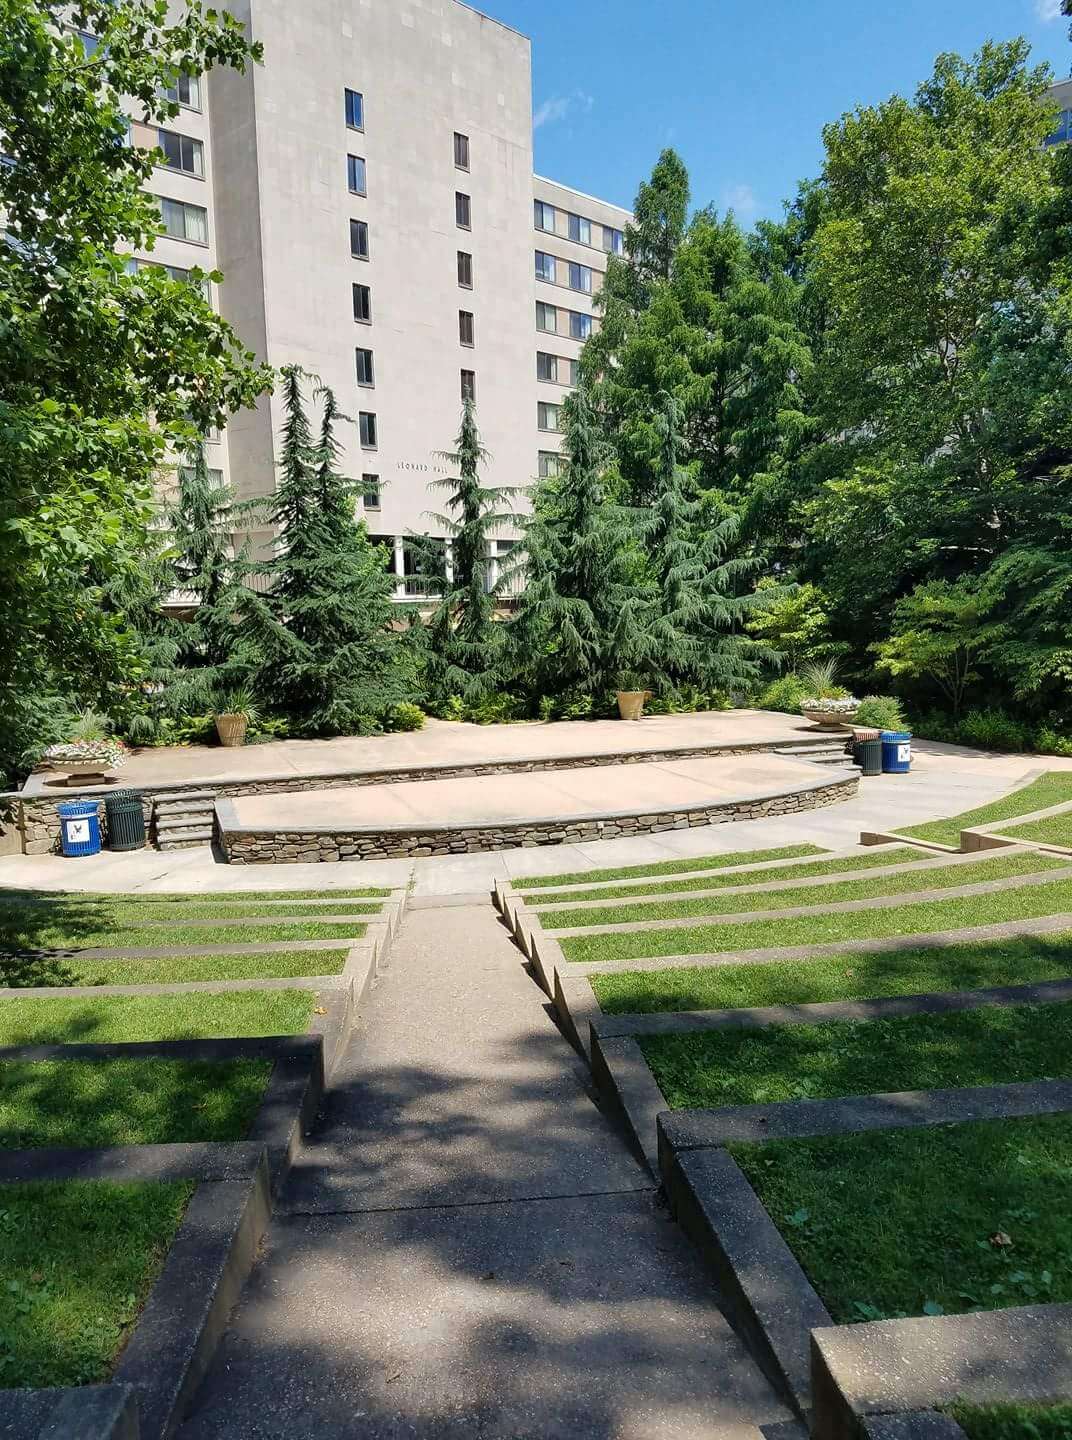 The Amphitheater at American University